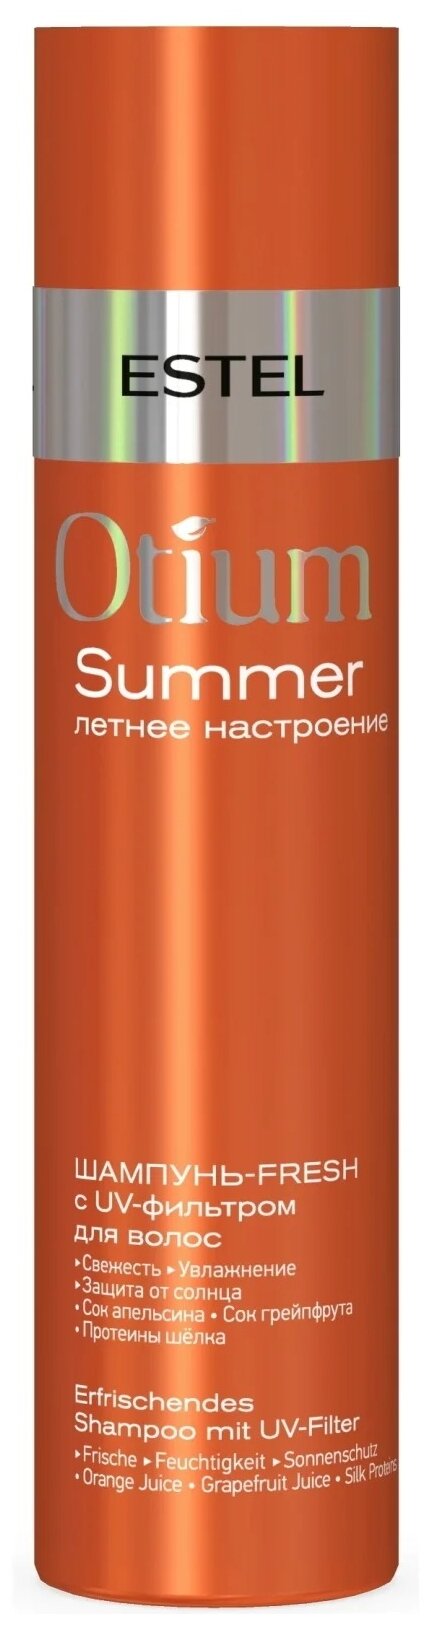 ESTEL шампунь-fresh Otium Summer c UV-фильтром, 250 мл